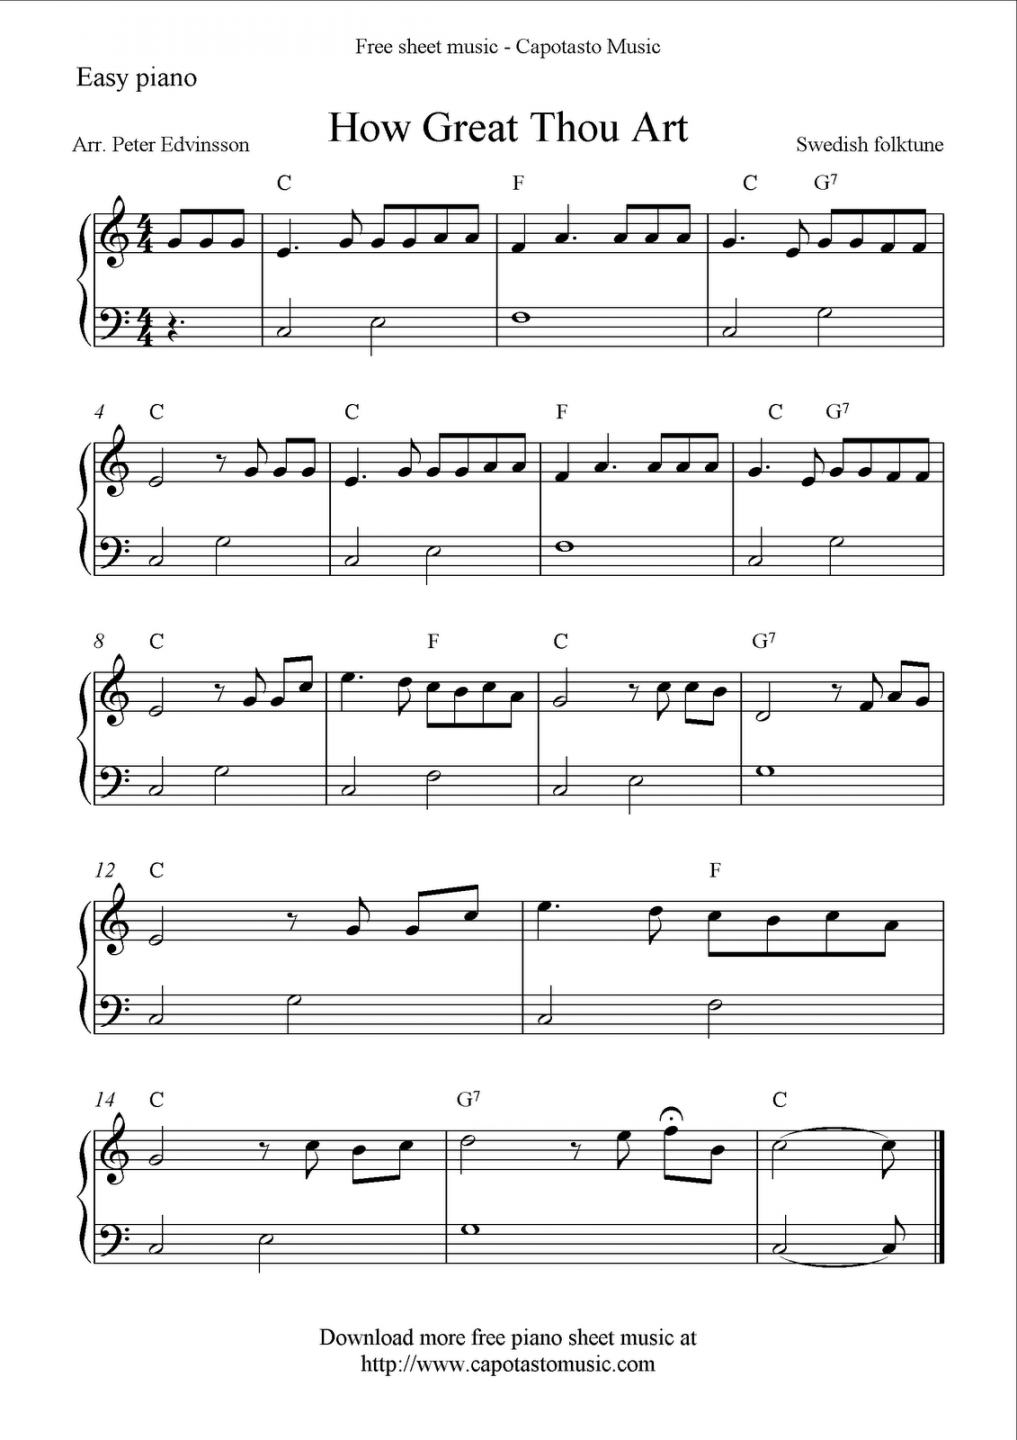 Free Printable Sheet Music - Printable - Free easy piano sheet music, How Great Thou Art  Piano sheet